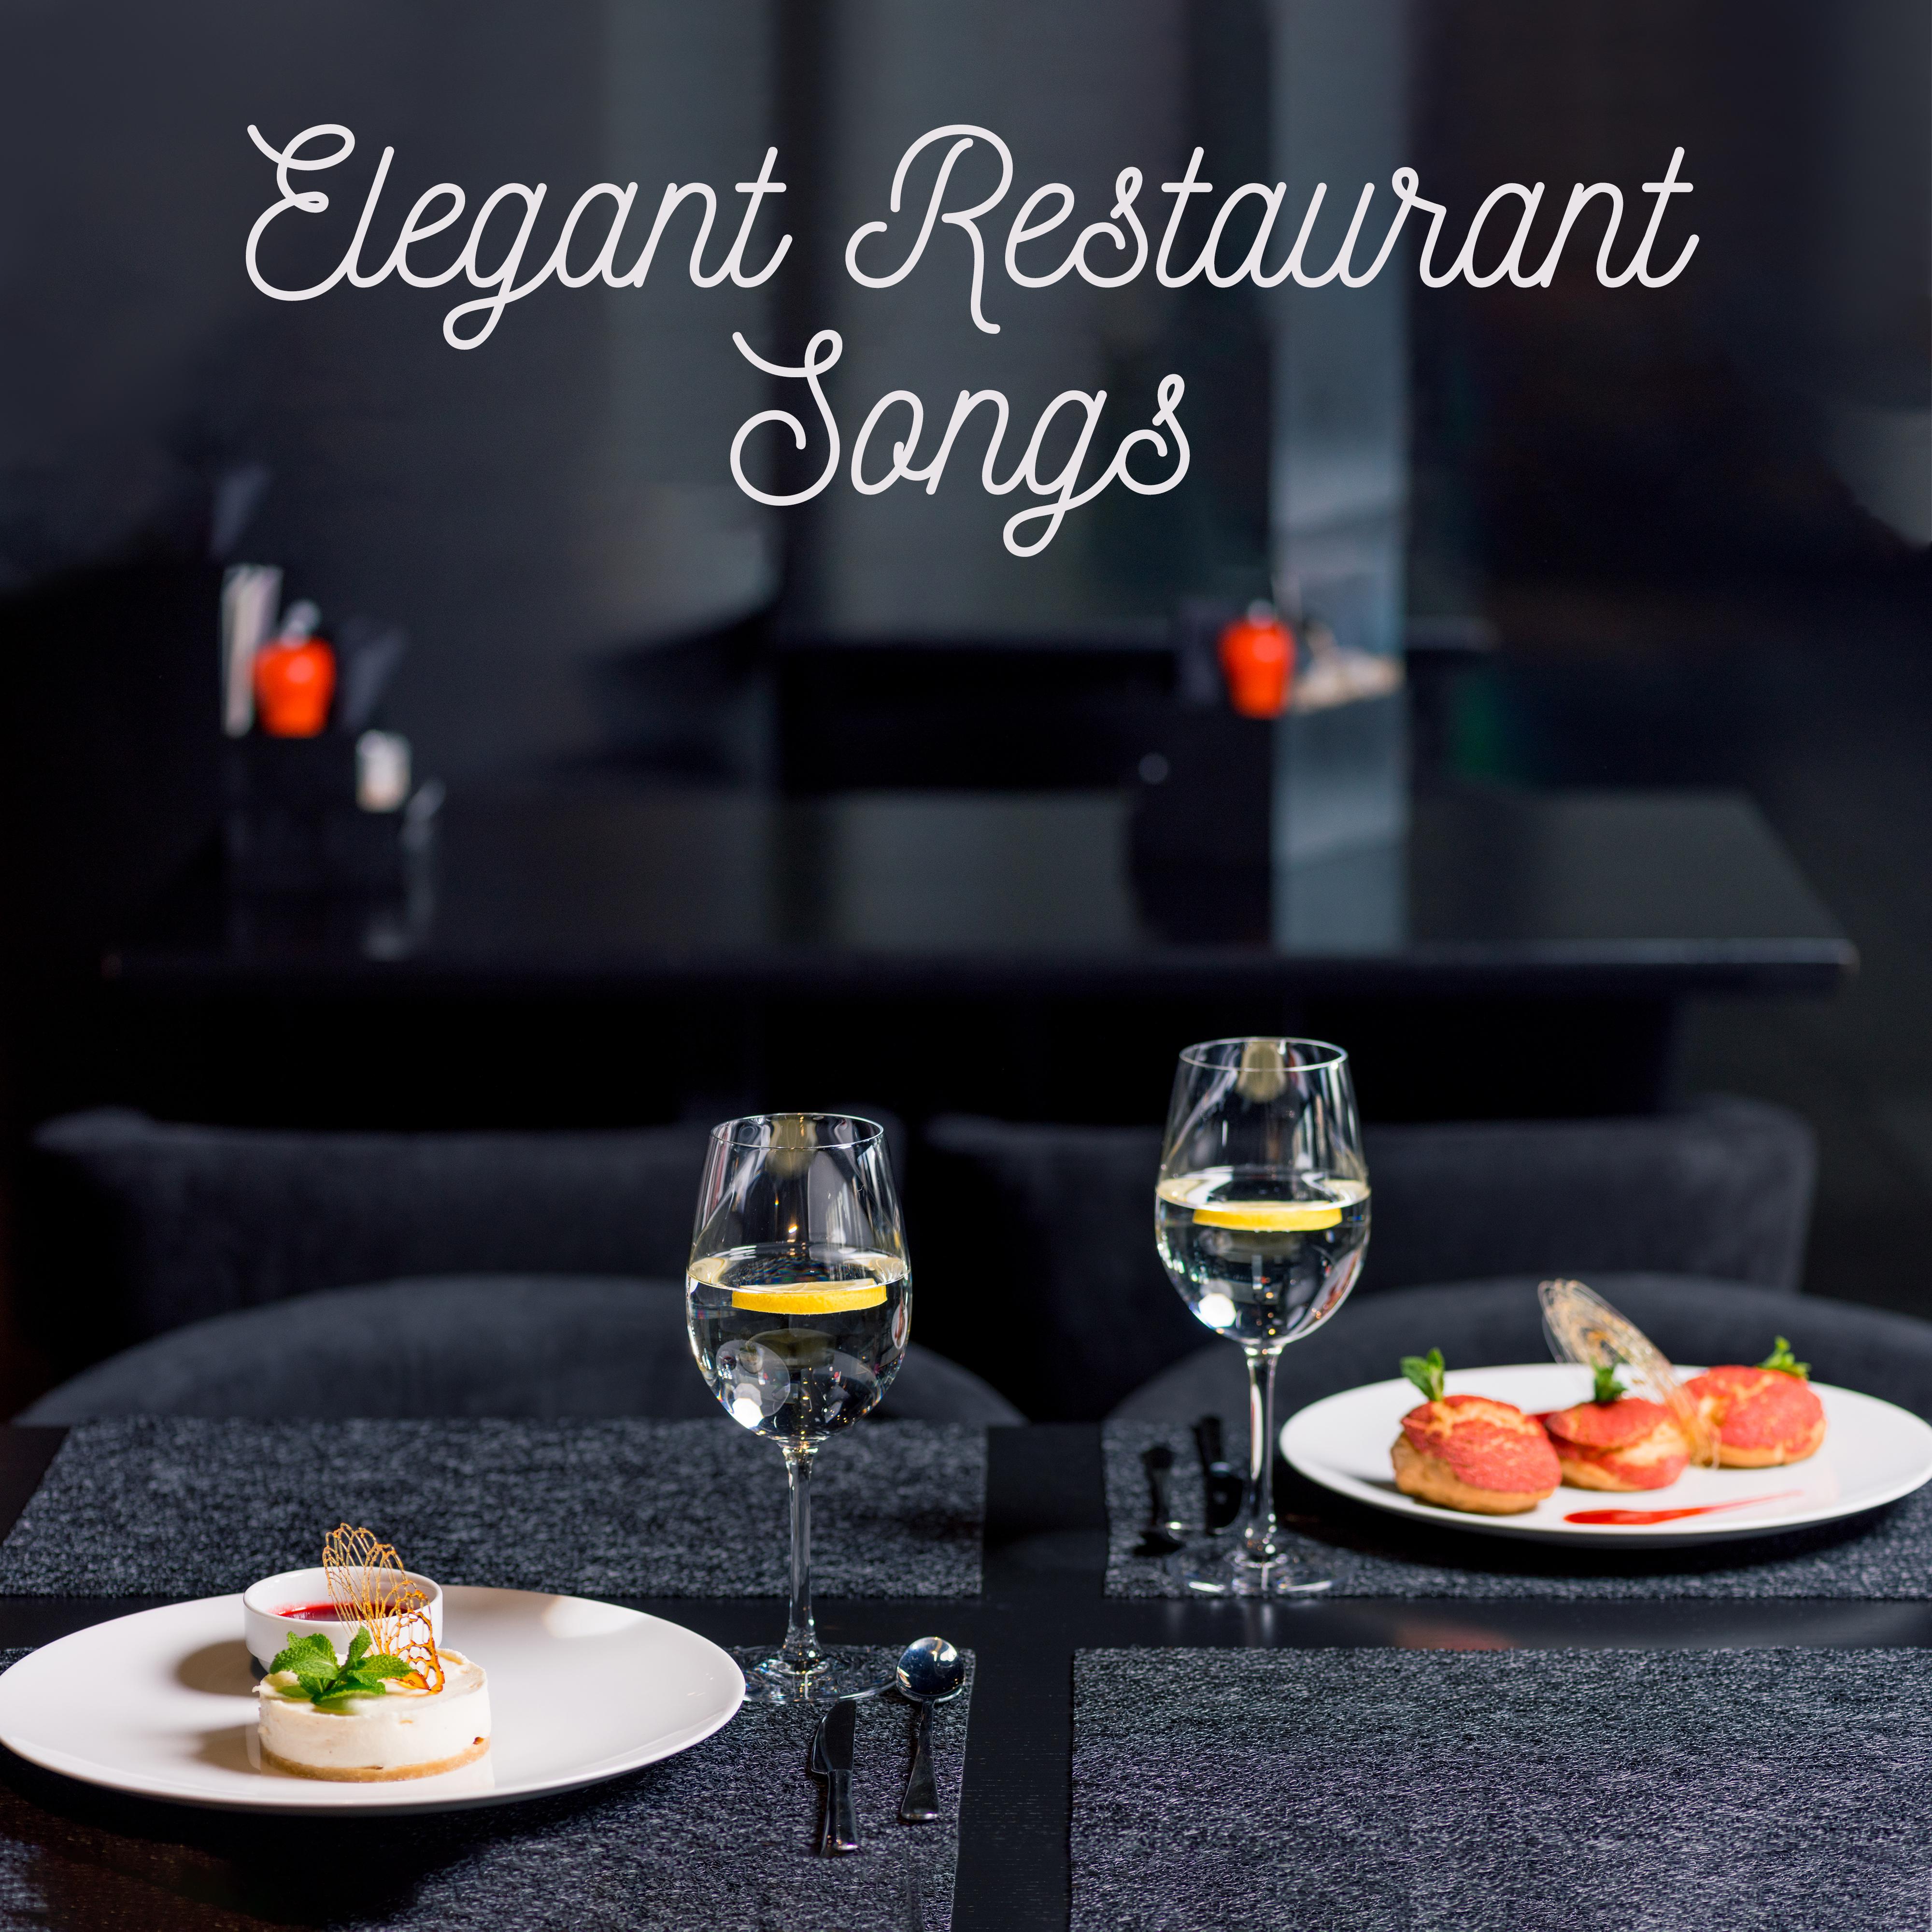 Elegant Restaurant Songs – Jazz Lounge 2019, Dinner Music, Instrumental Jazz Music Ambient, Relaxing Background Jazz